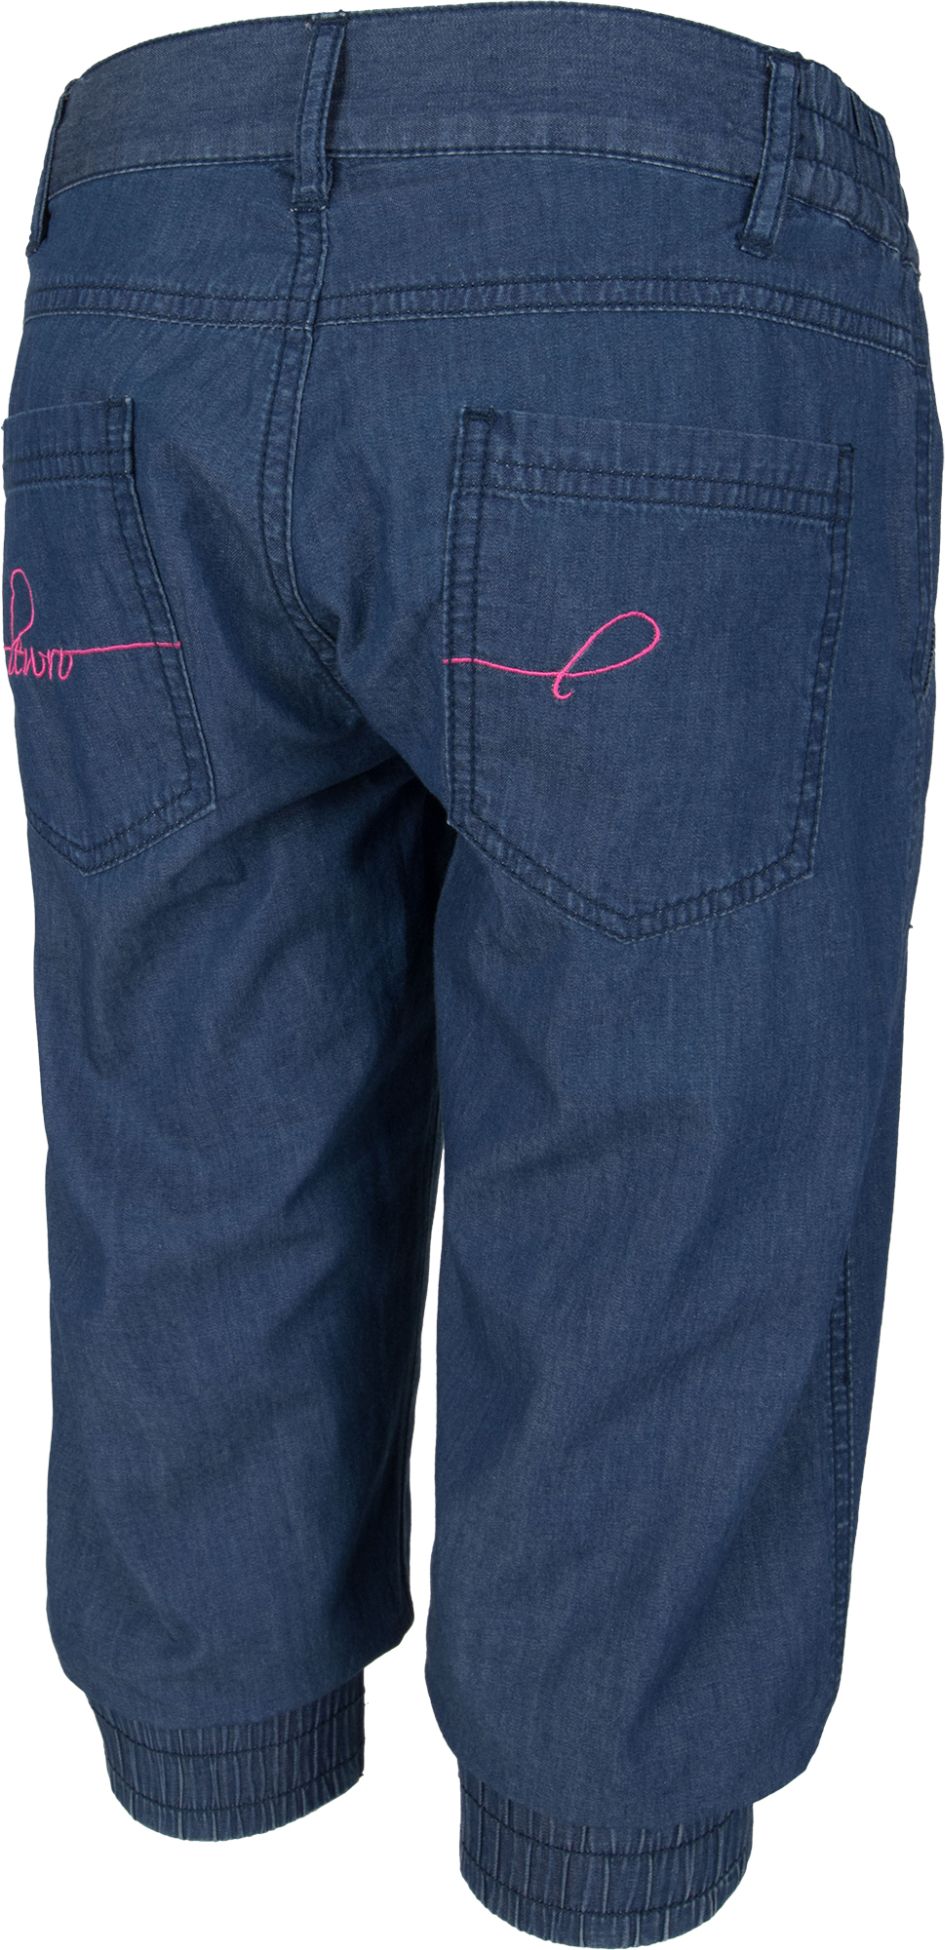 Girls’ three-quarter length pants